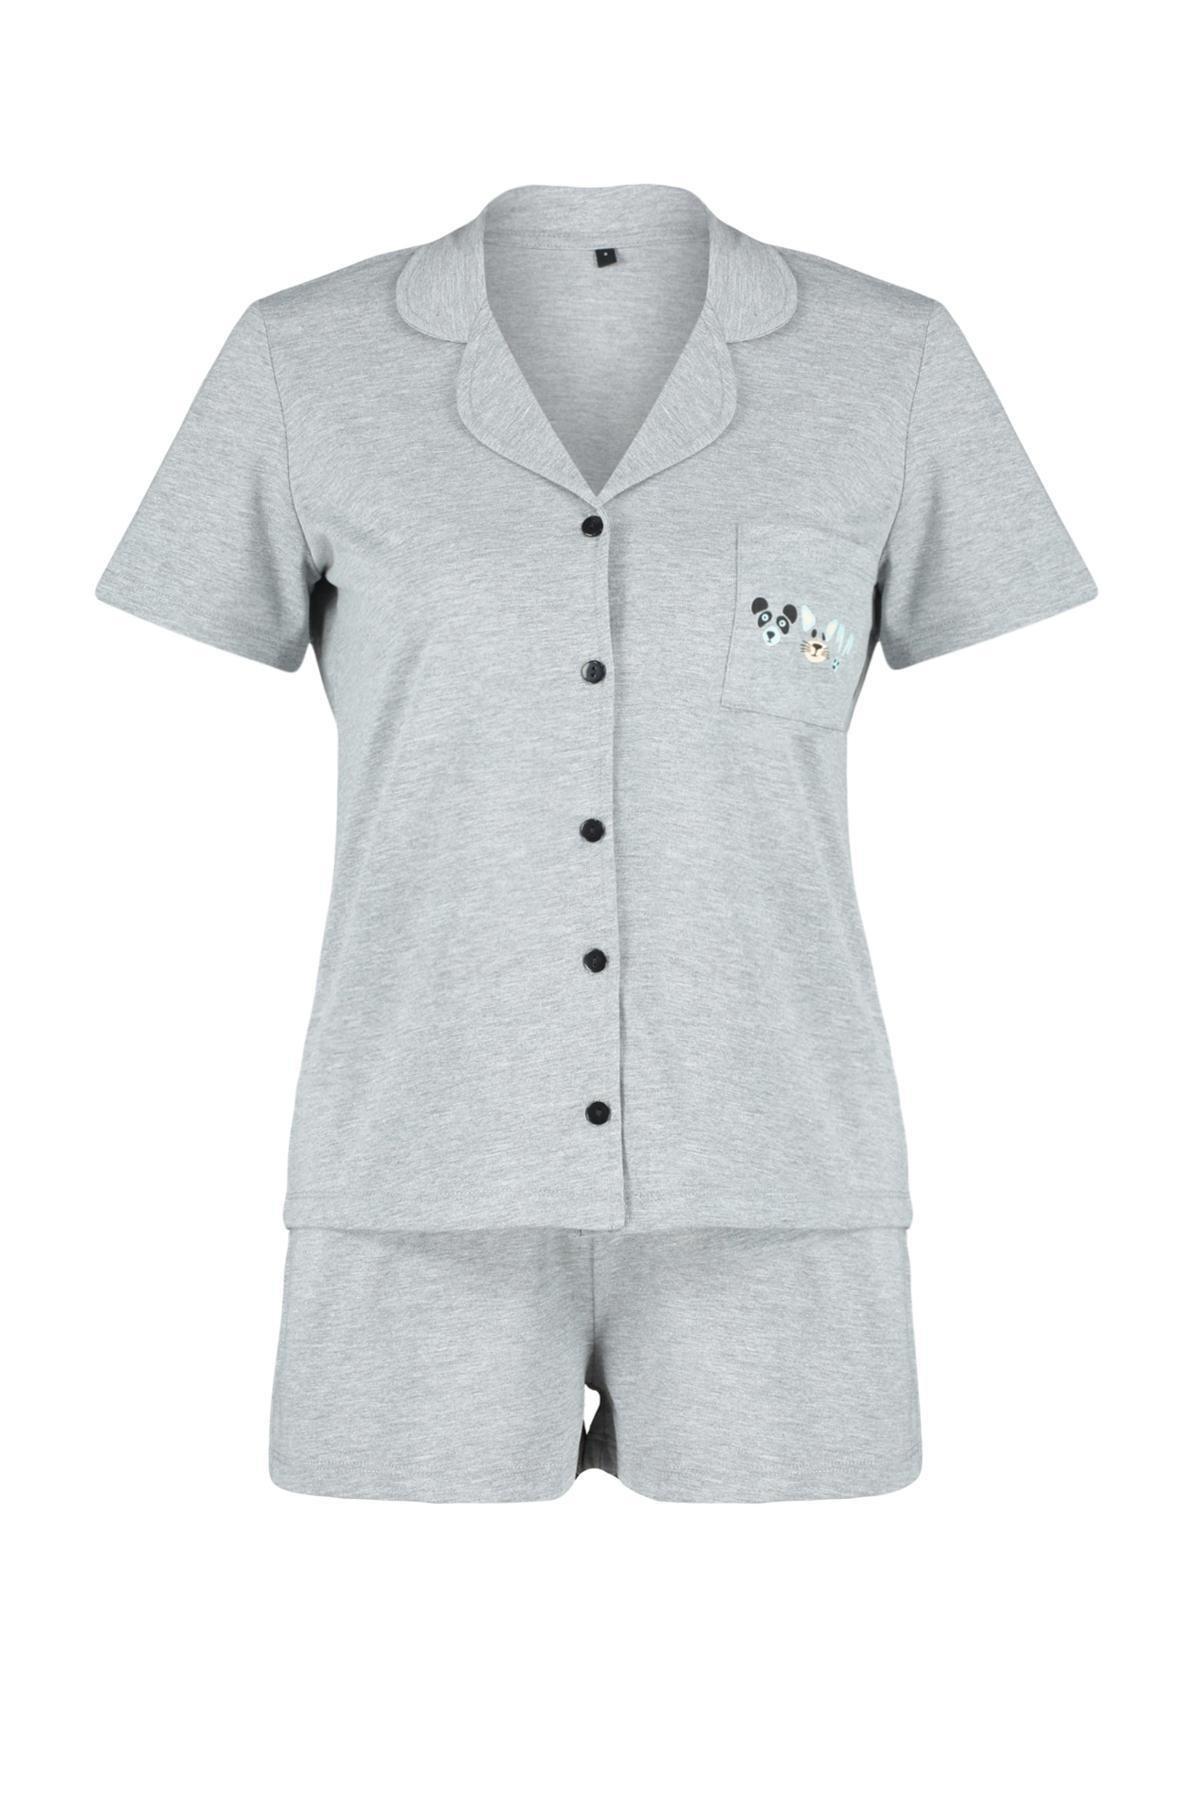 Trendyol - Gray Animal Printed Knitted Pyjamas Set